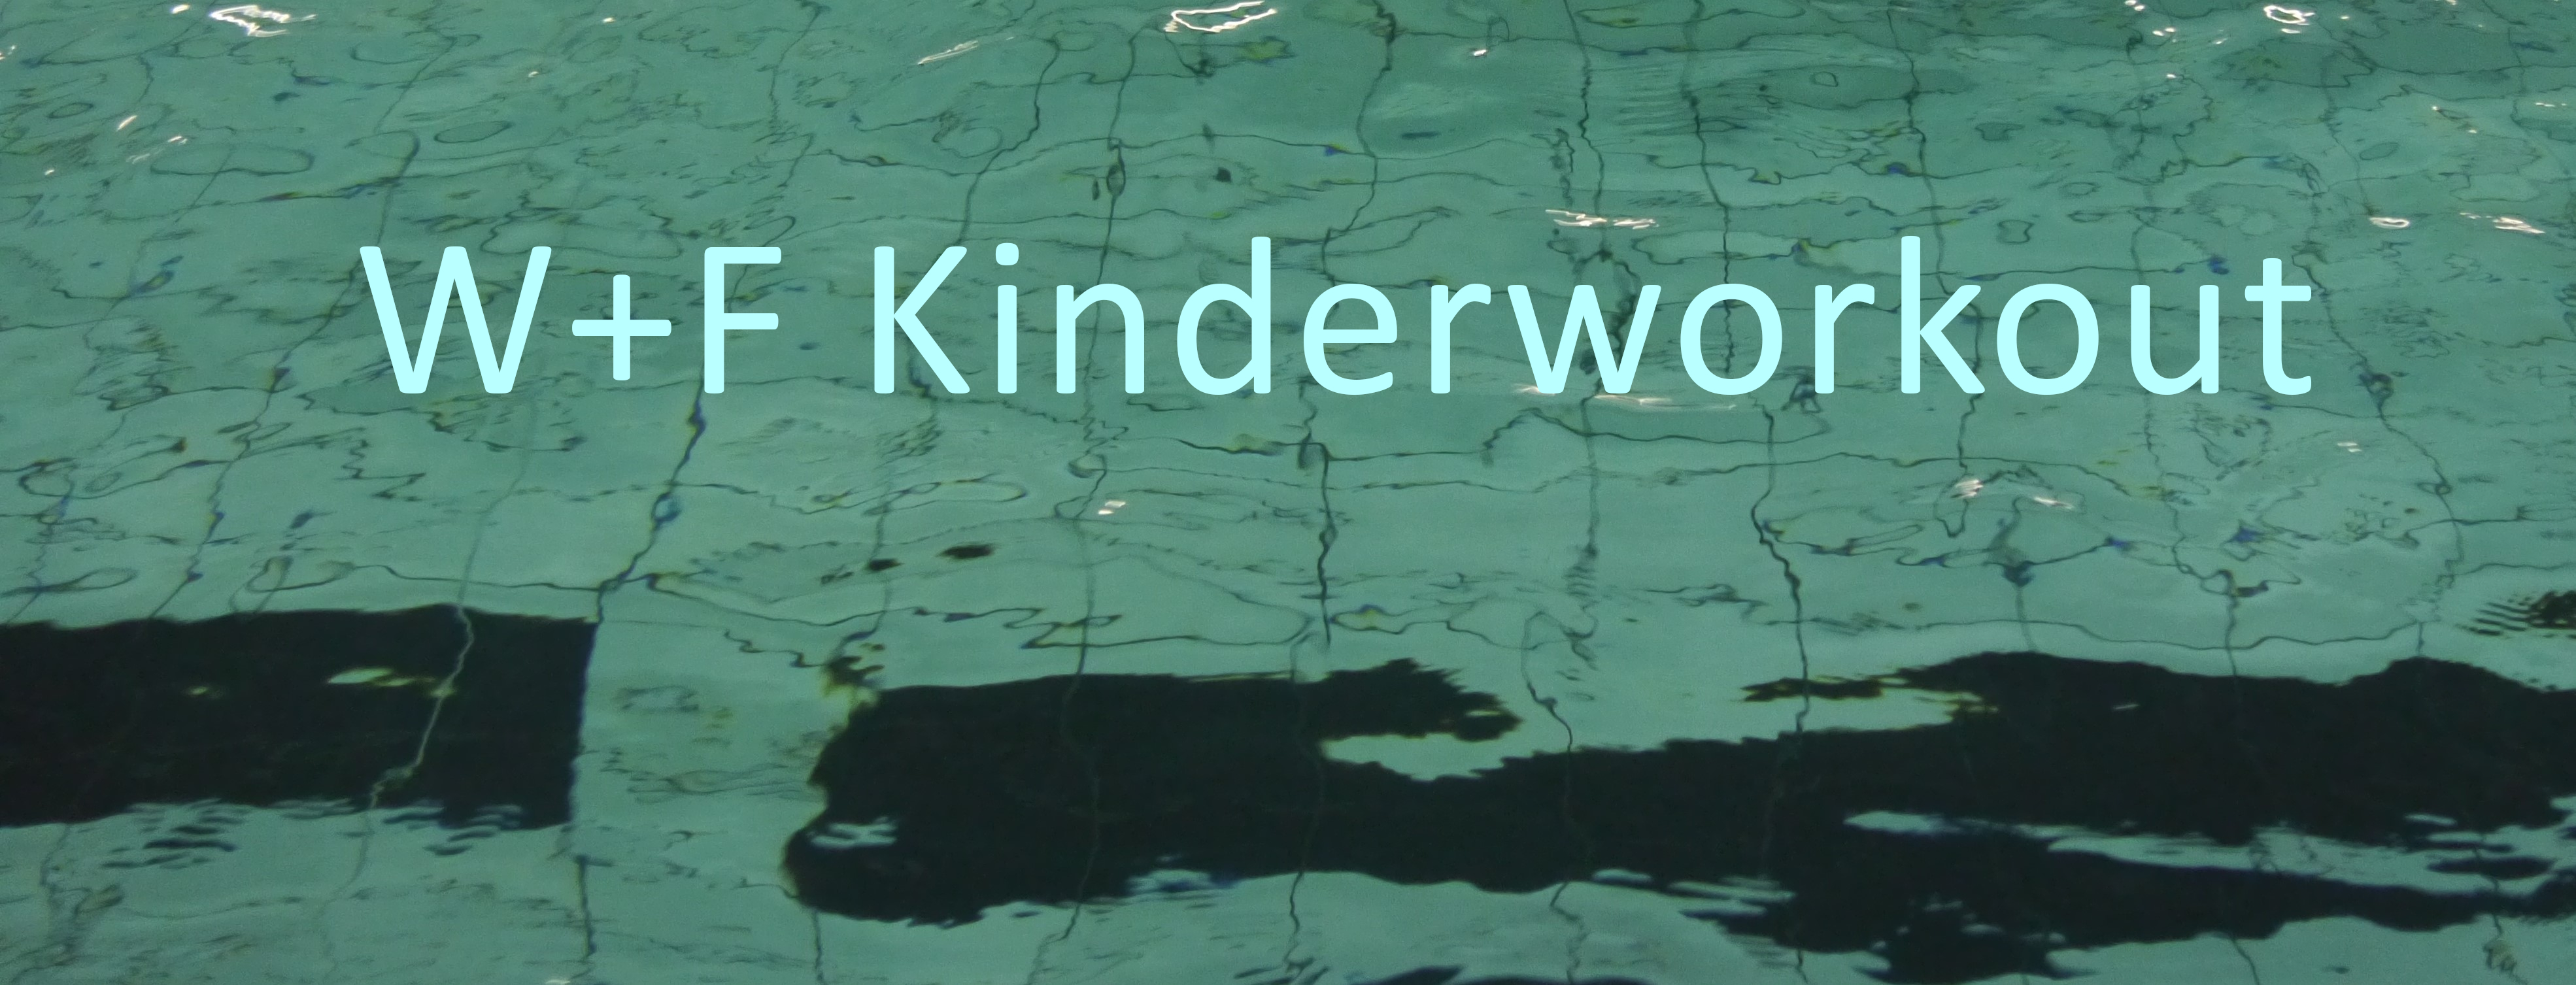 wf kinderworkout